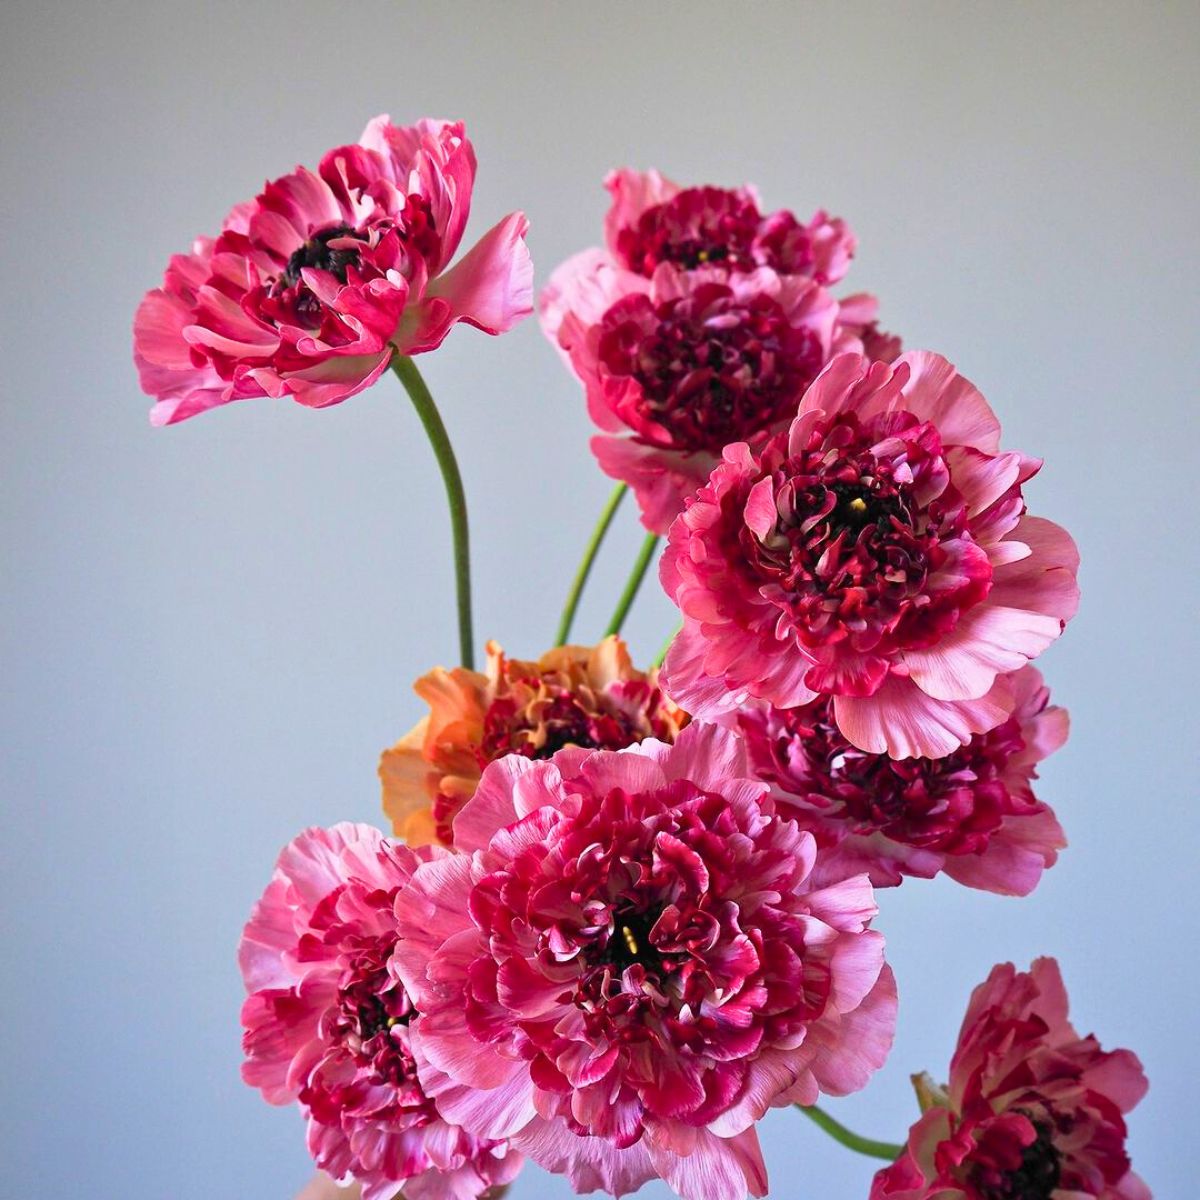 Hot Pink Charlotte ranunculus flowers